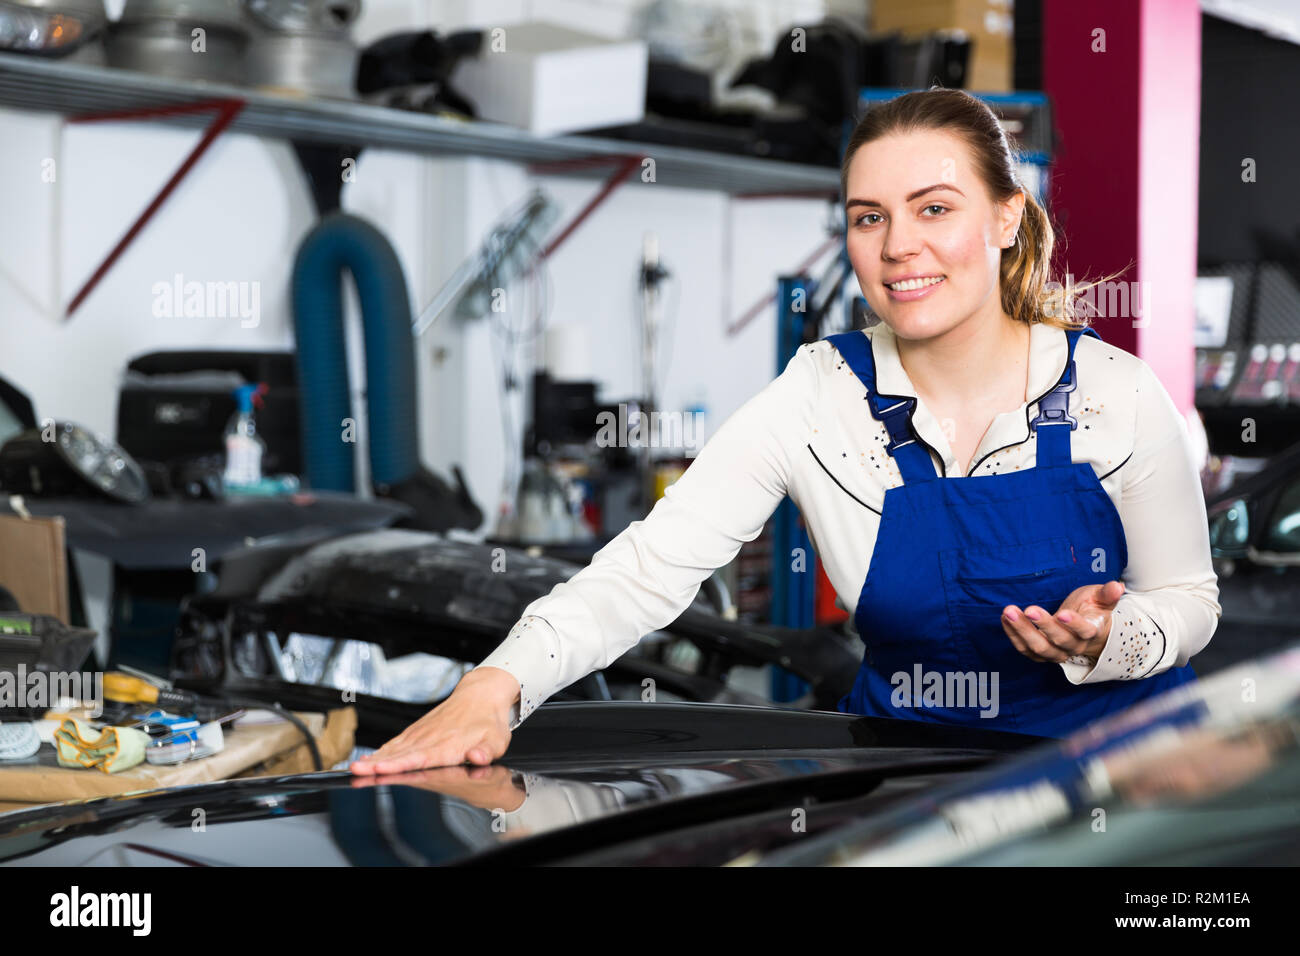 Young woman mechanic demonstrating repainted car in auto repair shop Stock Photo